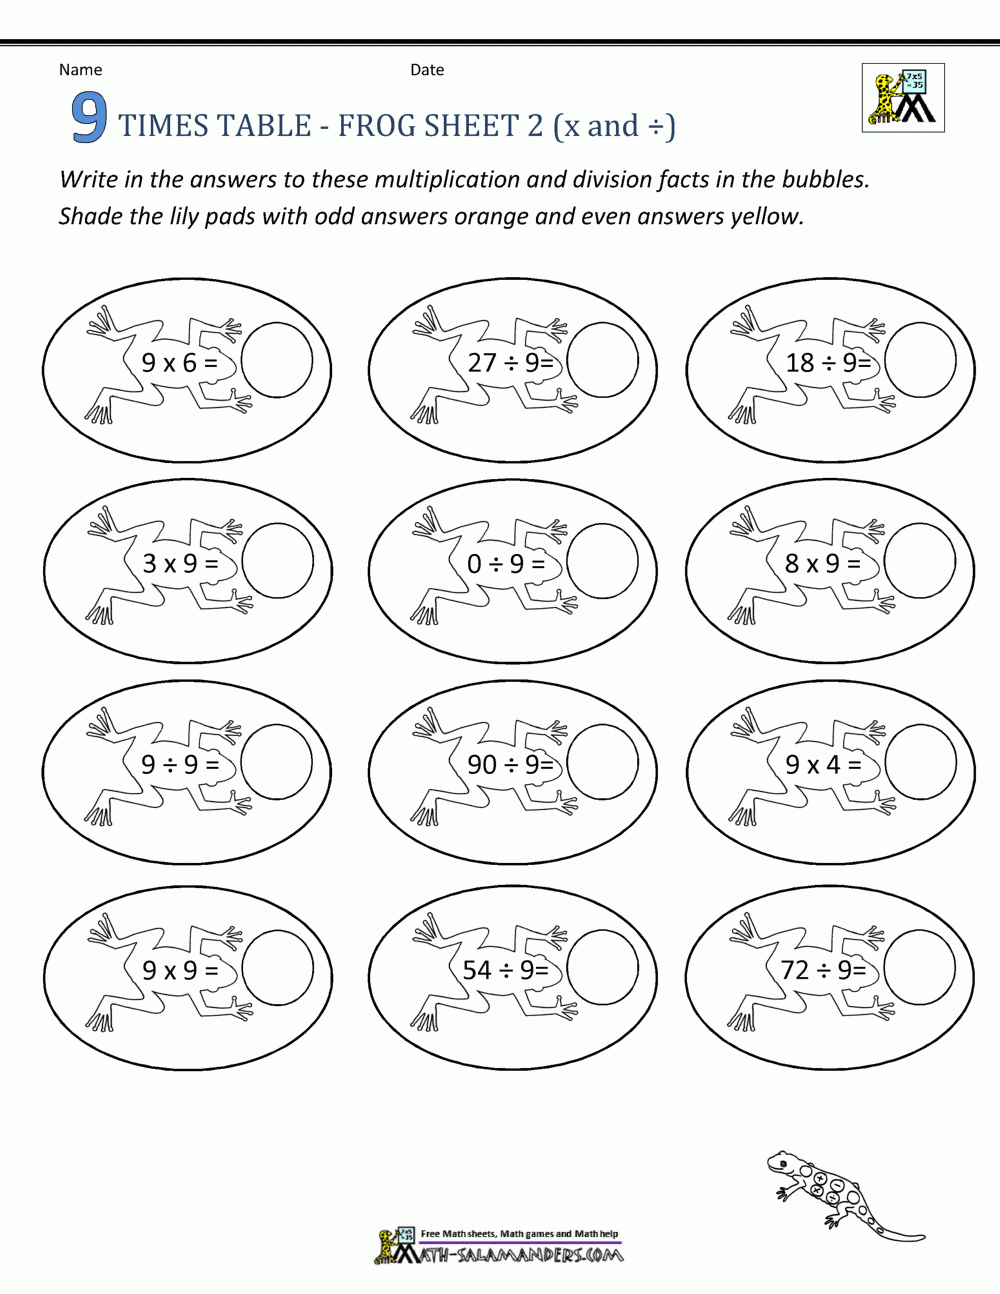 multiplication-worksheets-5-9-printable-multiplication-flash-cards